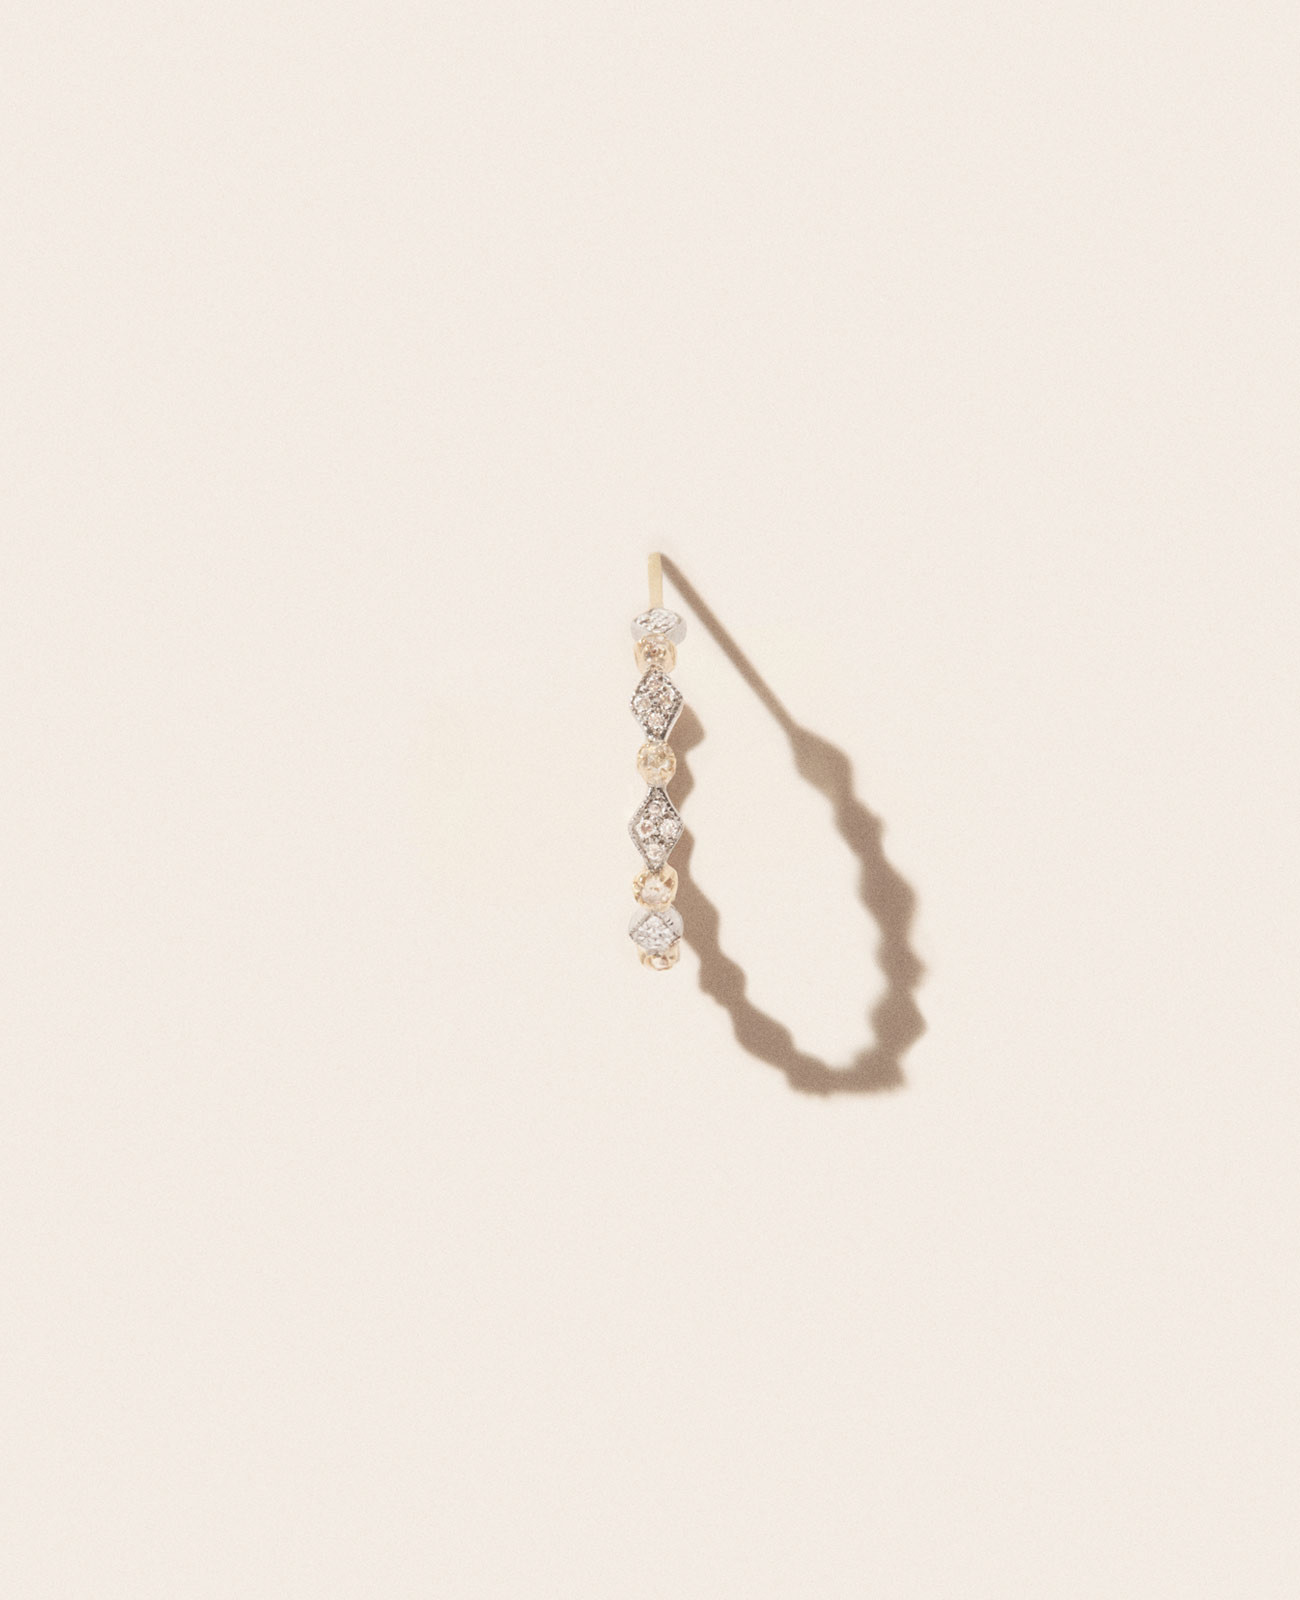 AVA DIAMOND earring pascale monvoisin jewelry paris